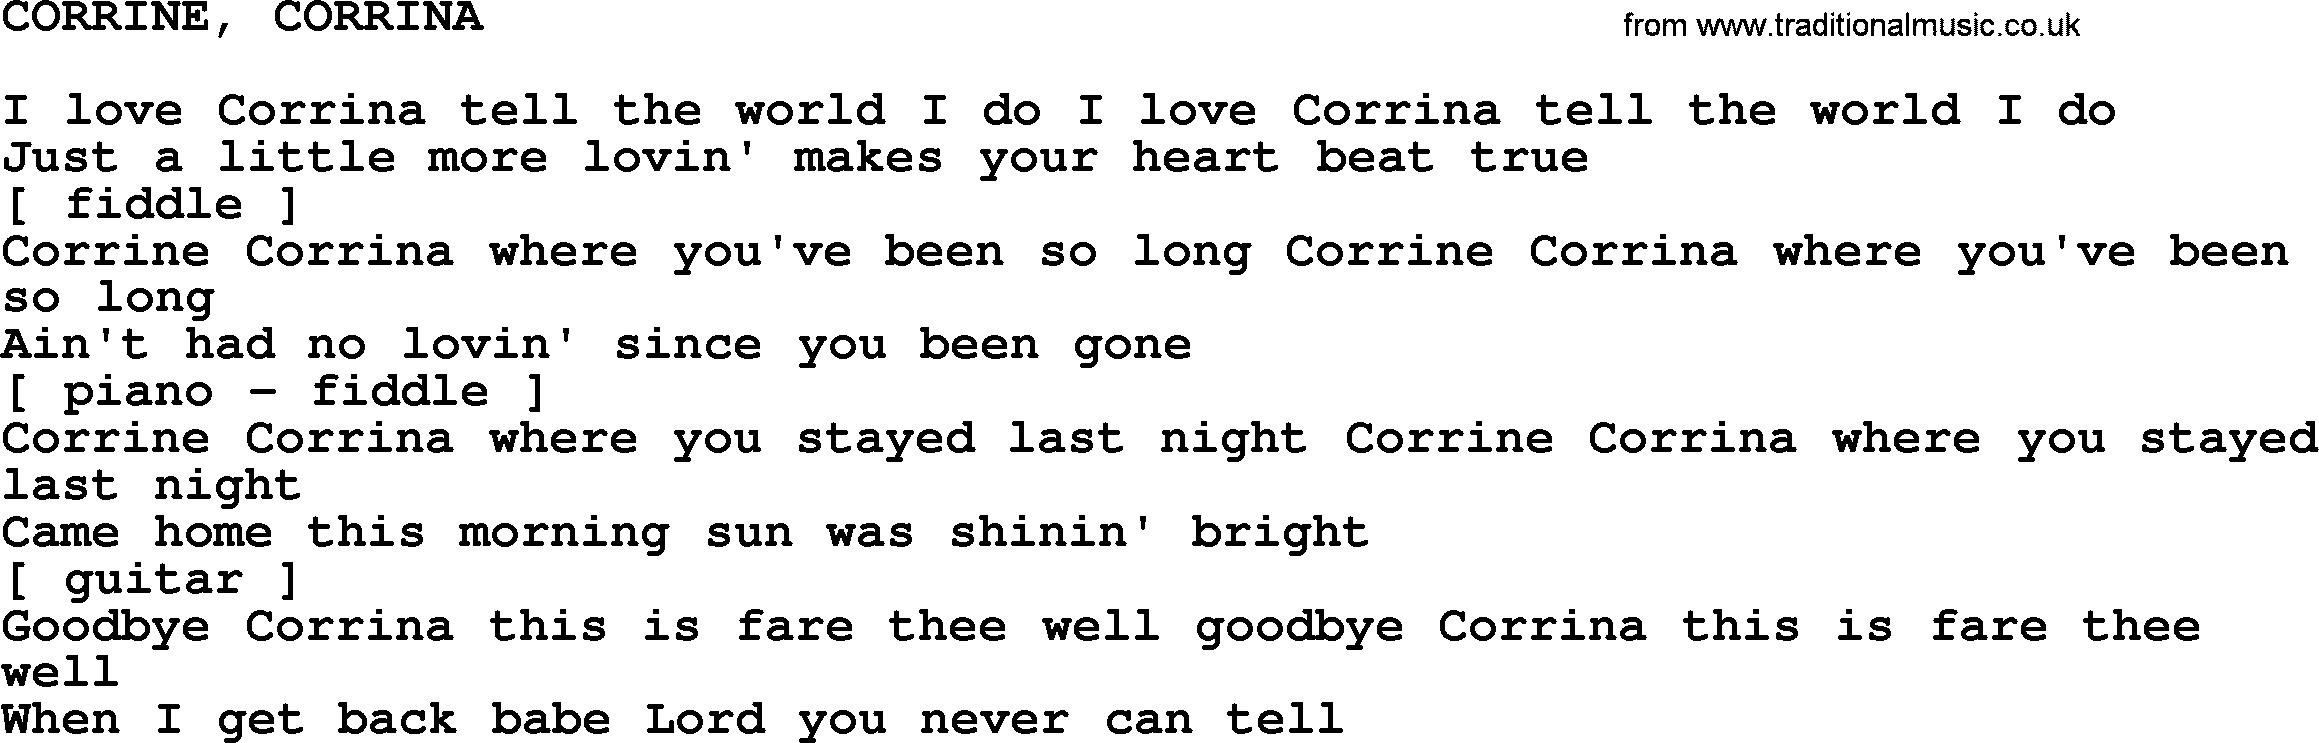 Merle Haggard song: Corrine, Corrina, lyrics.